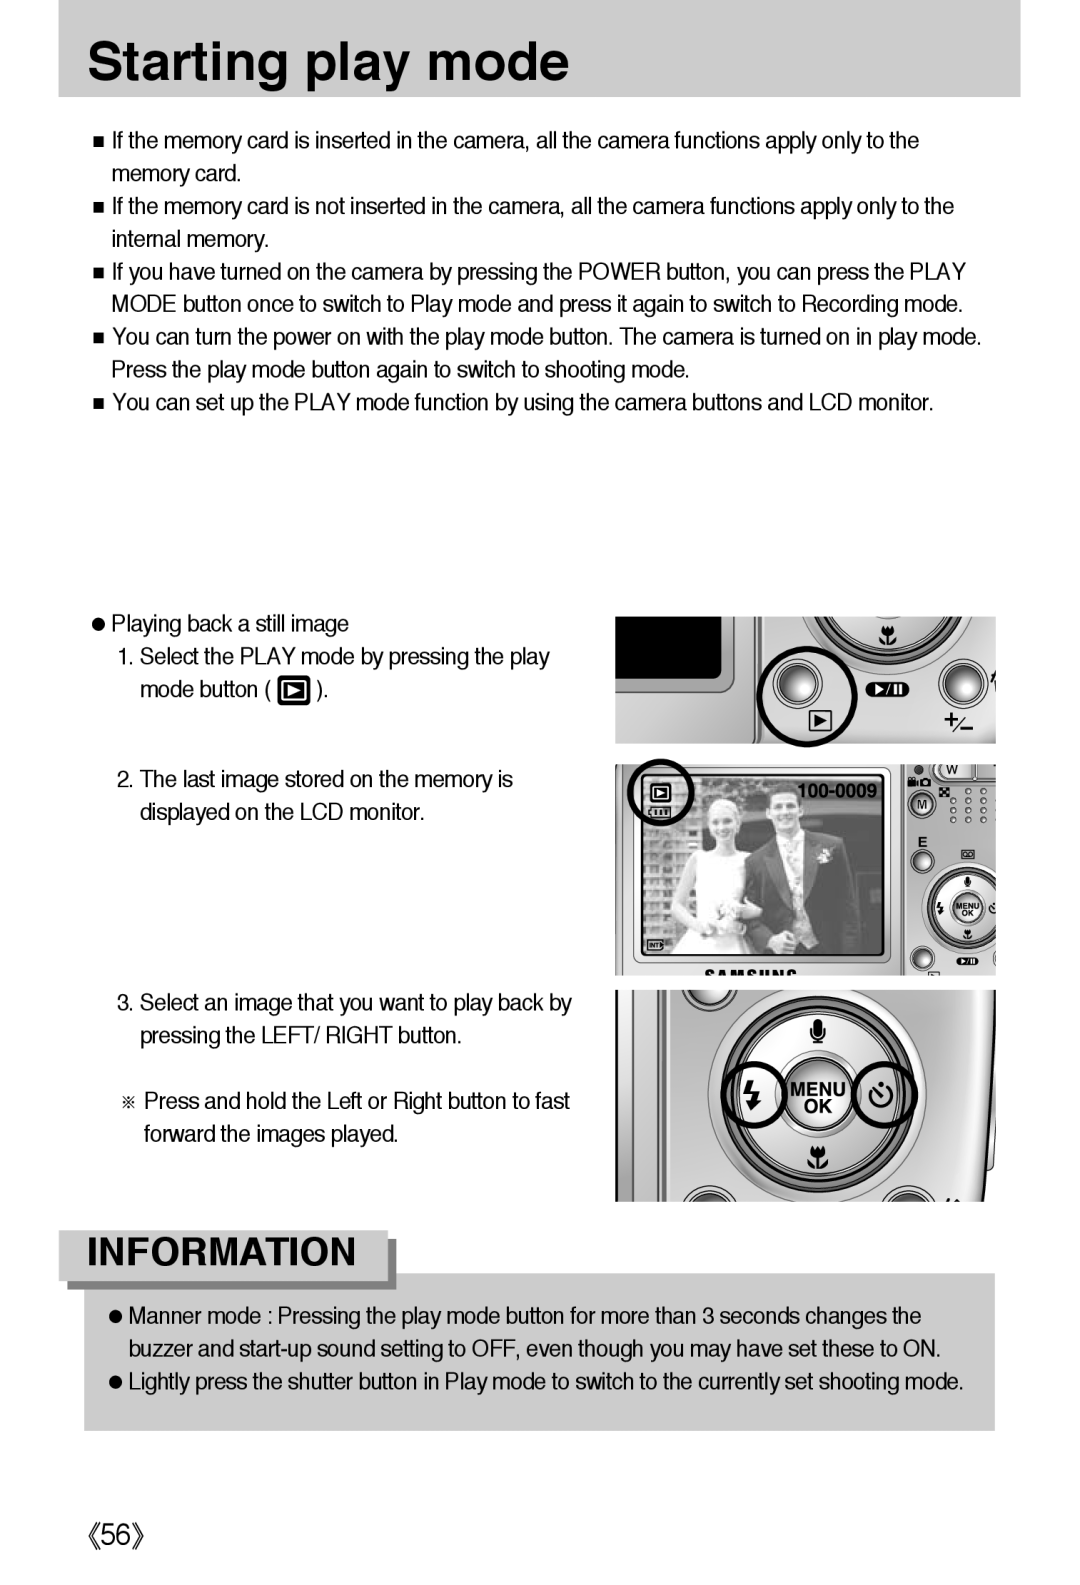 Samsung L50 user manual Starting play mode, 《56》, Information 